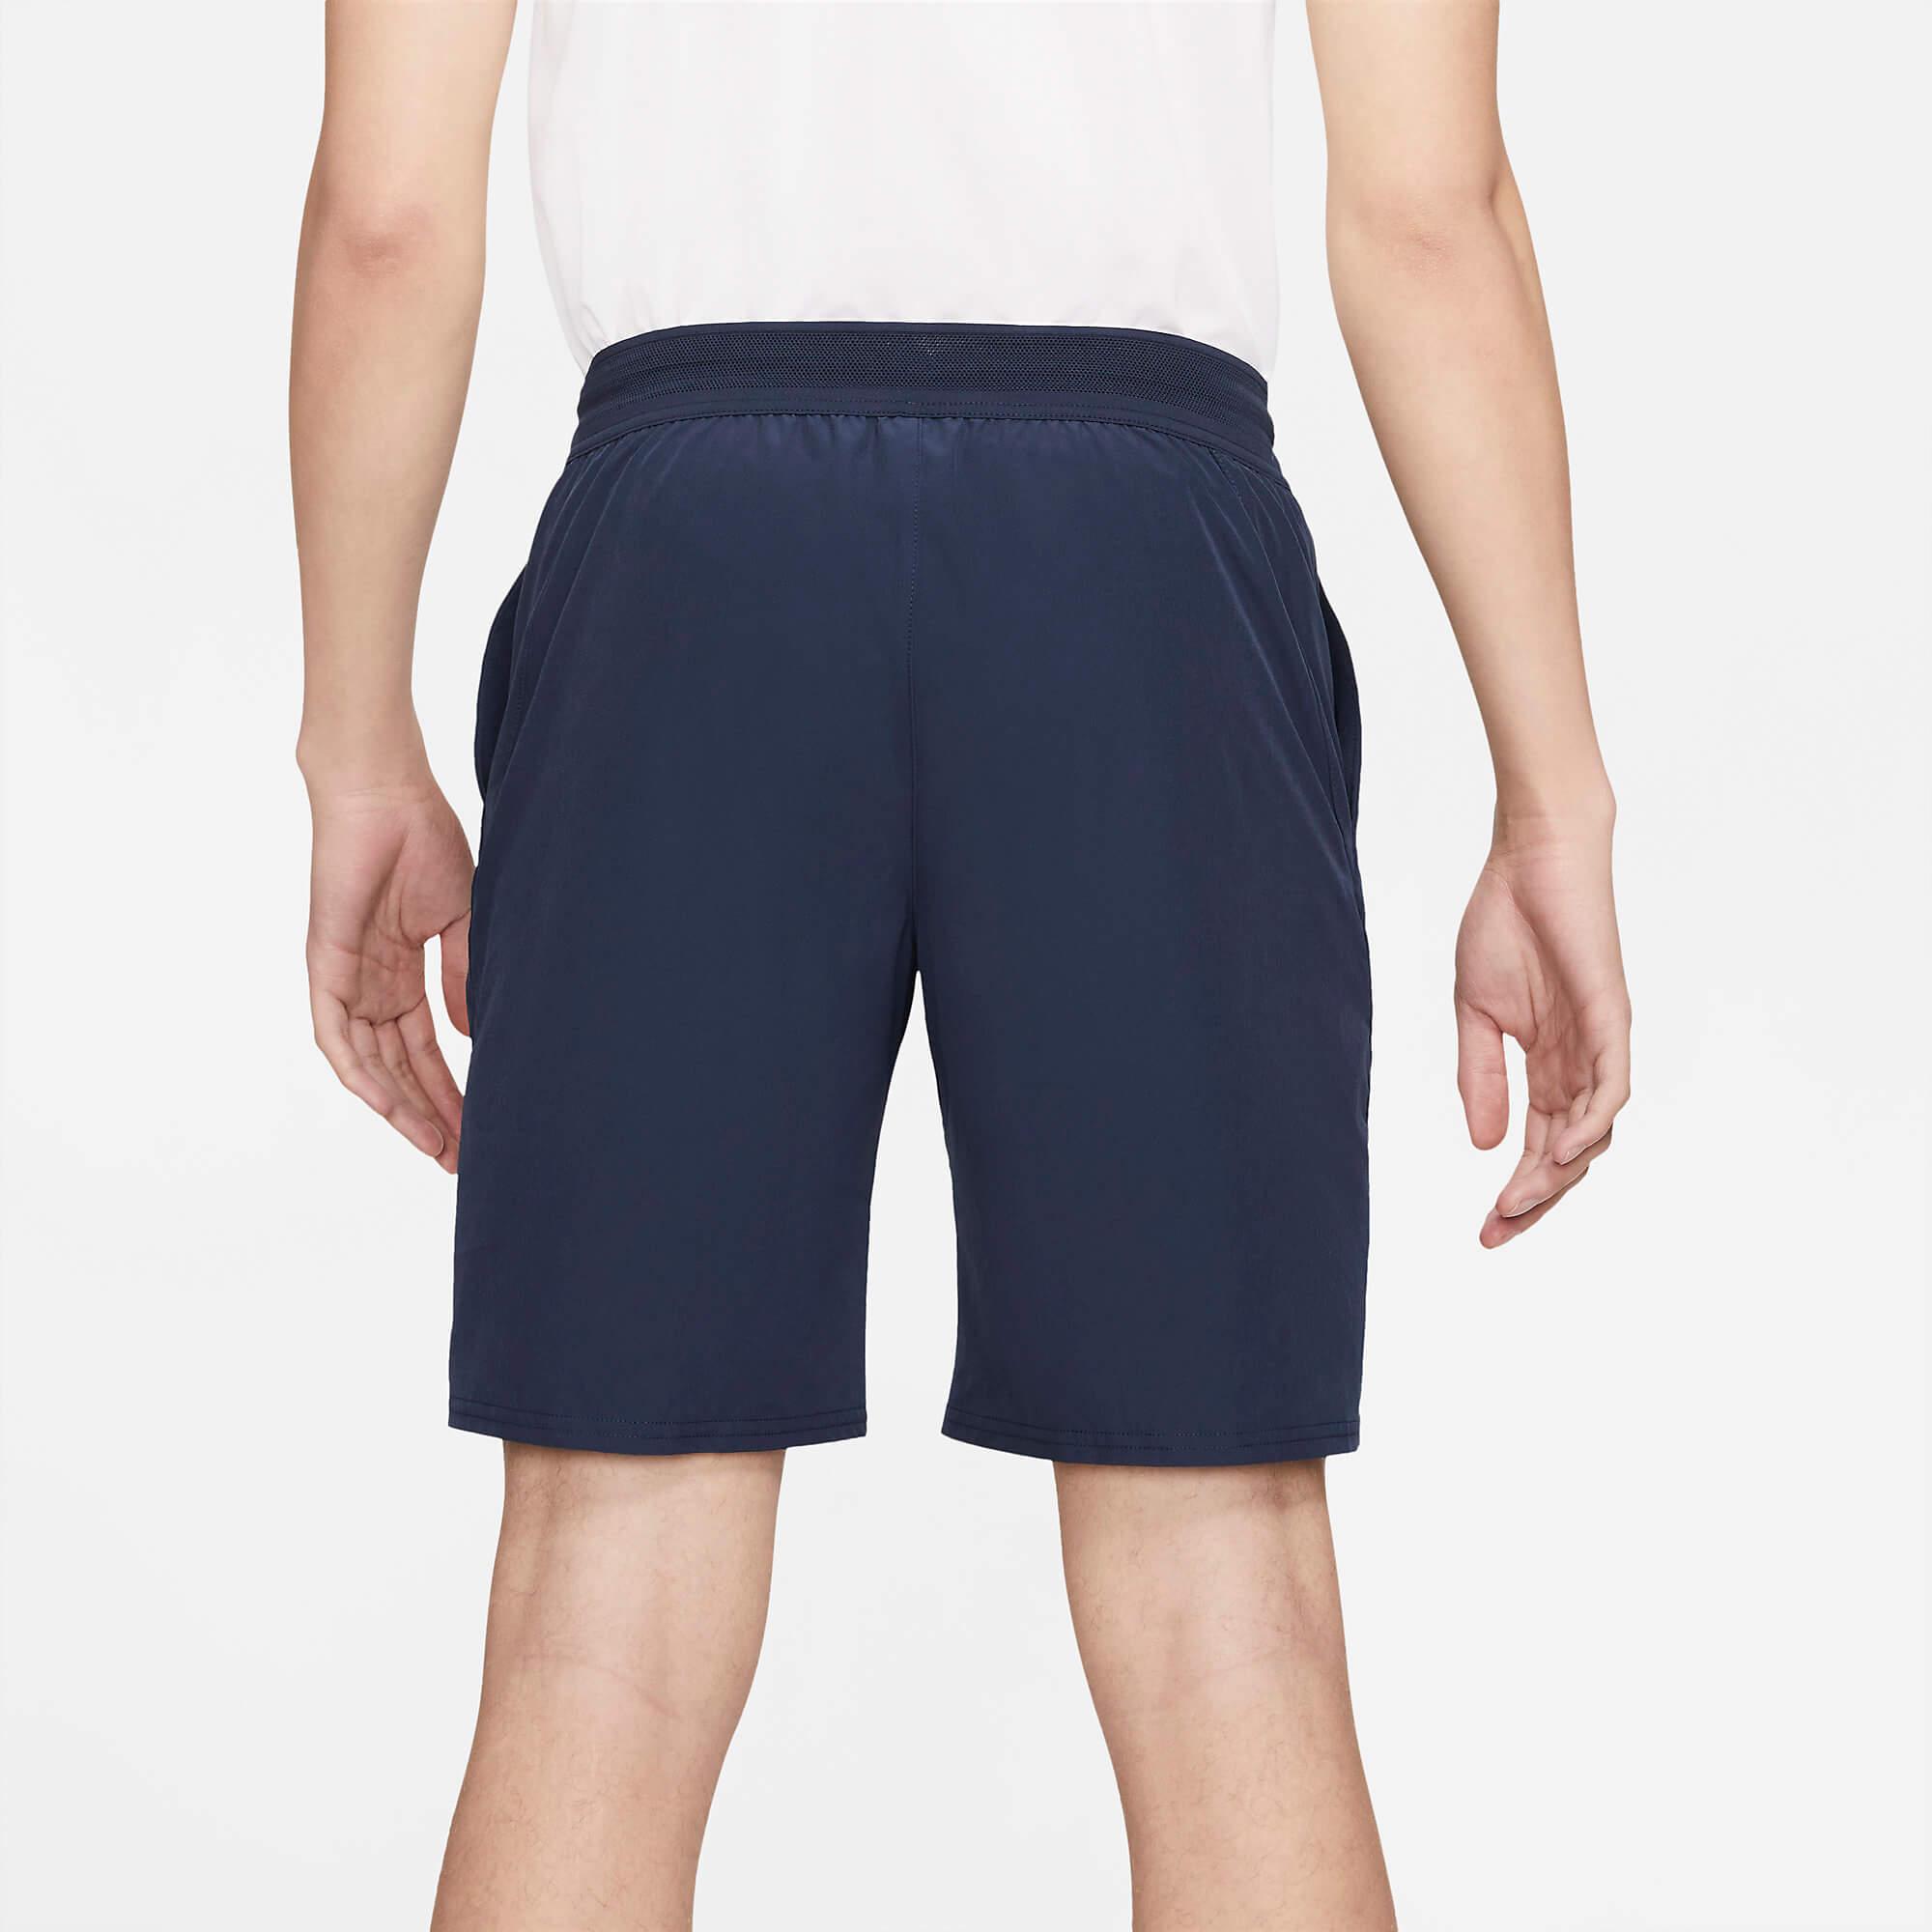 Nike Mens Advantage 9 Inch Tennis Shorts - Navy Blue - Tennisnuts.com